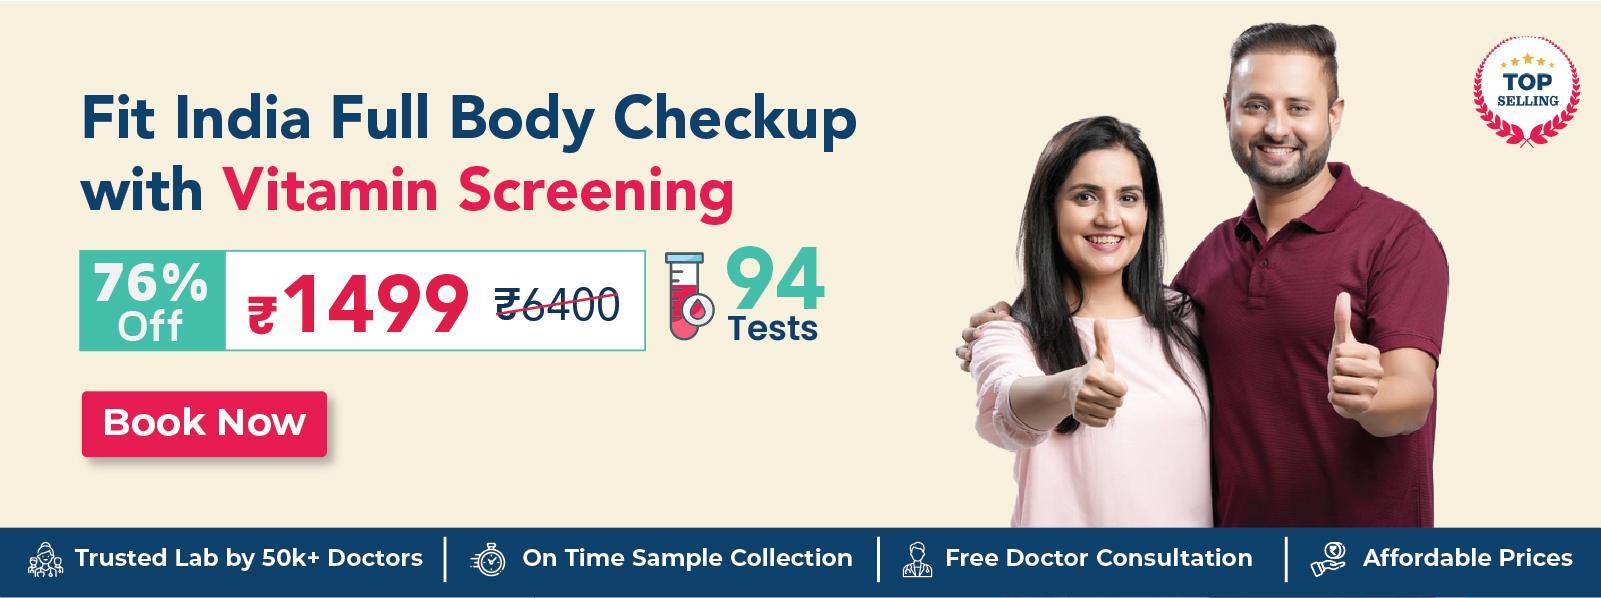 Fit India Full Body checkup with Vitamin Screening in Delhi